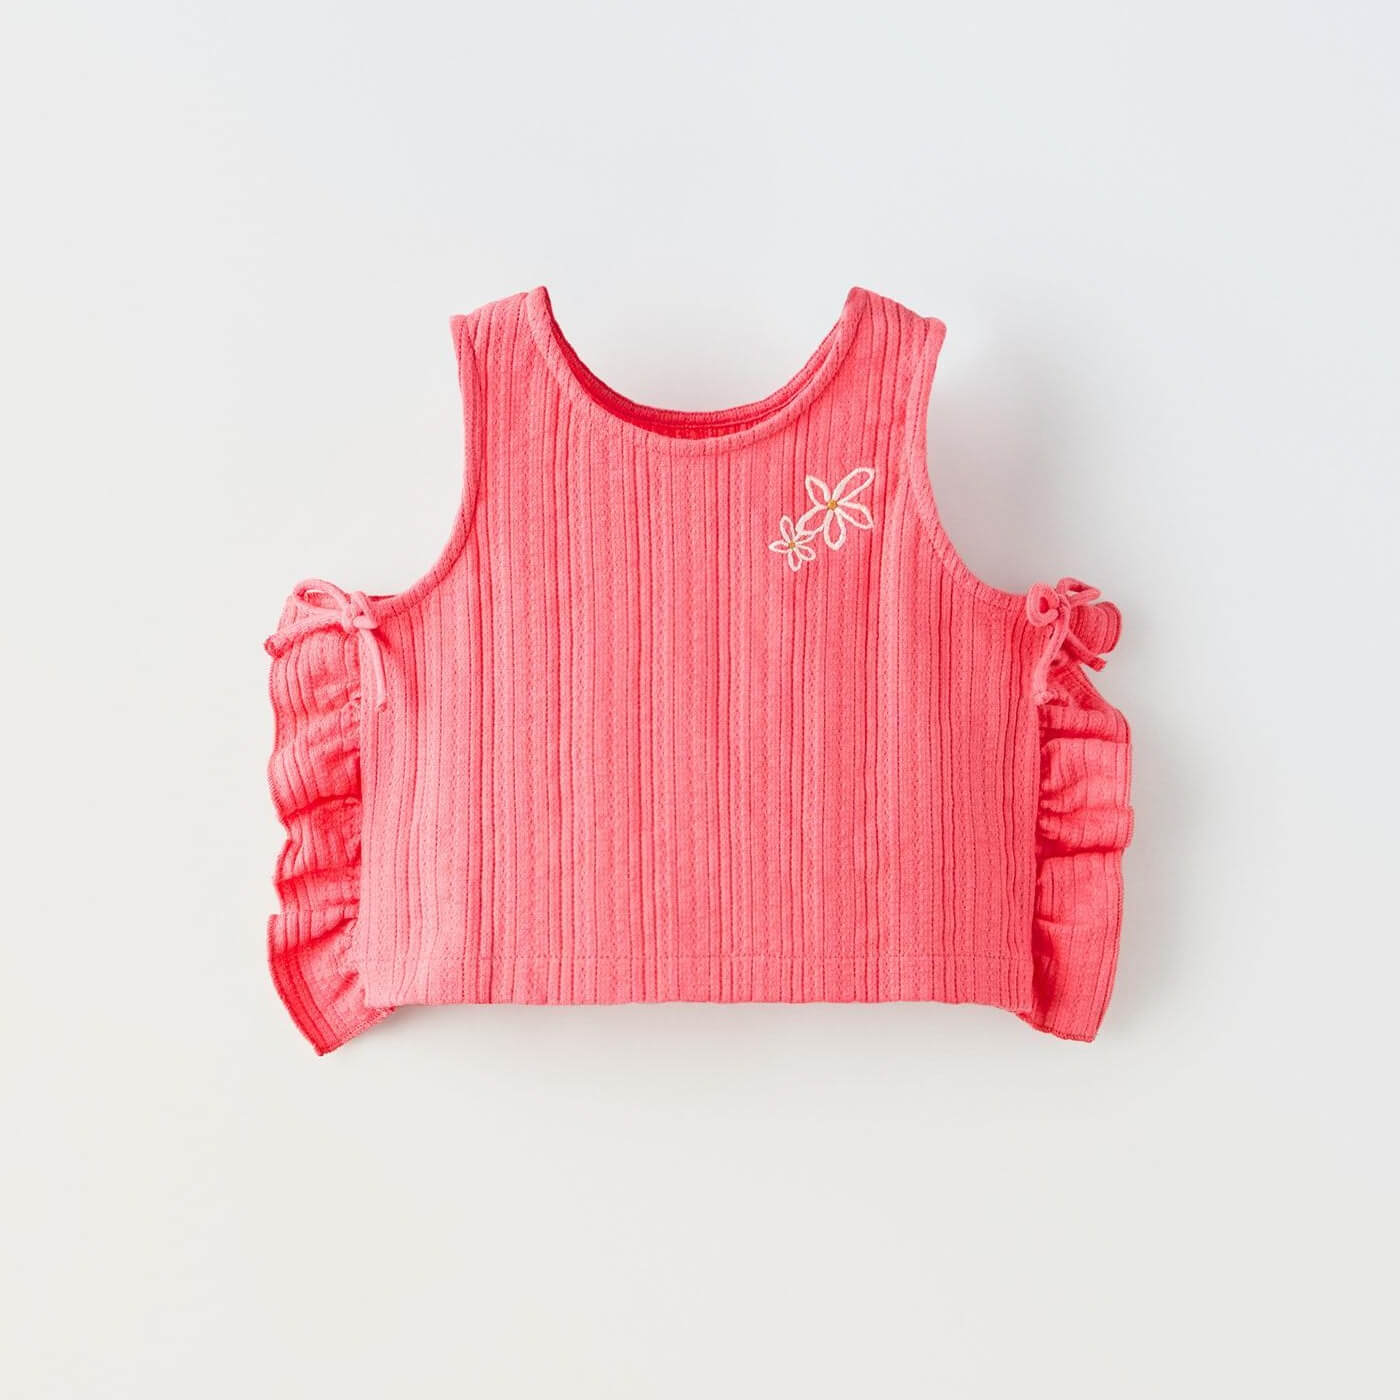 Топ Zara Summer Camp Open-knit Floral Embroidery, ярко-красный